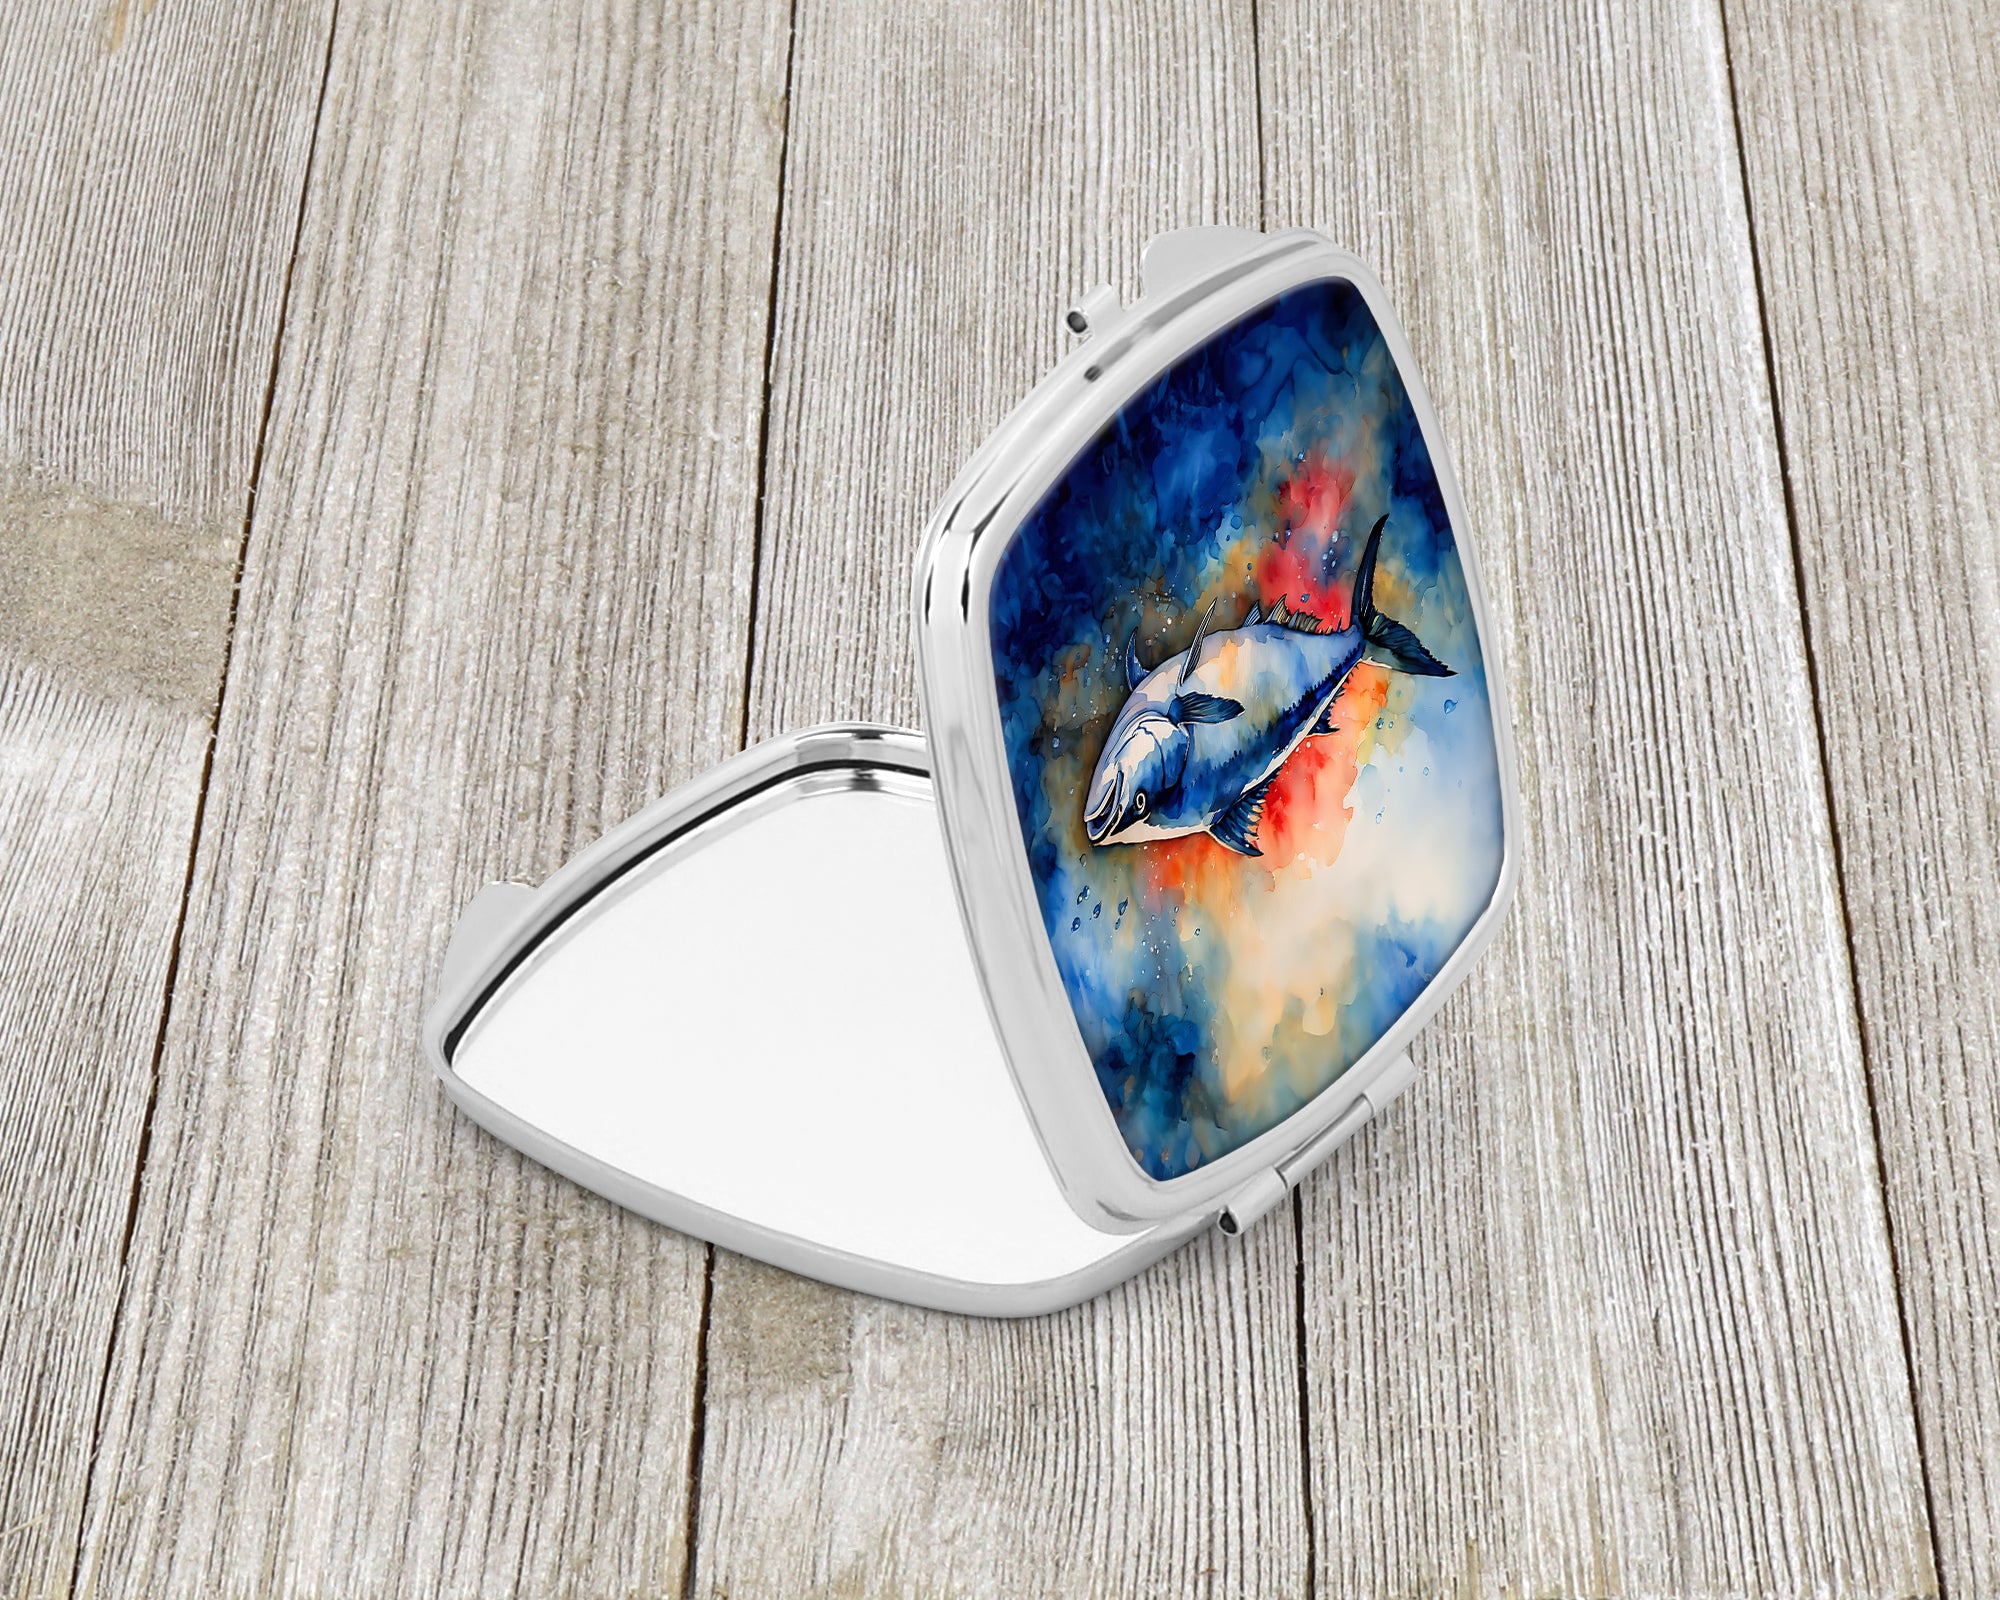 Buy this Bluefin Tuna Compact Mirror